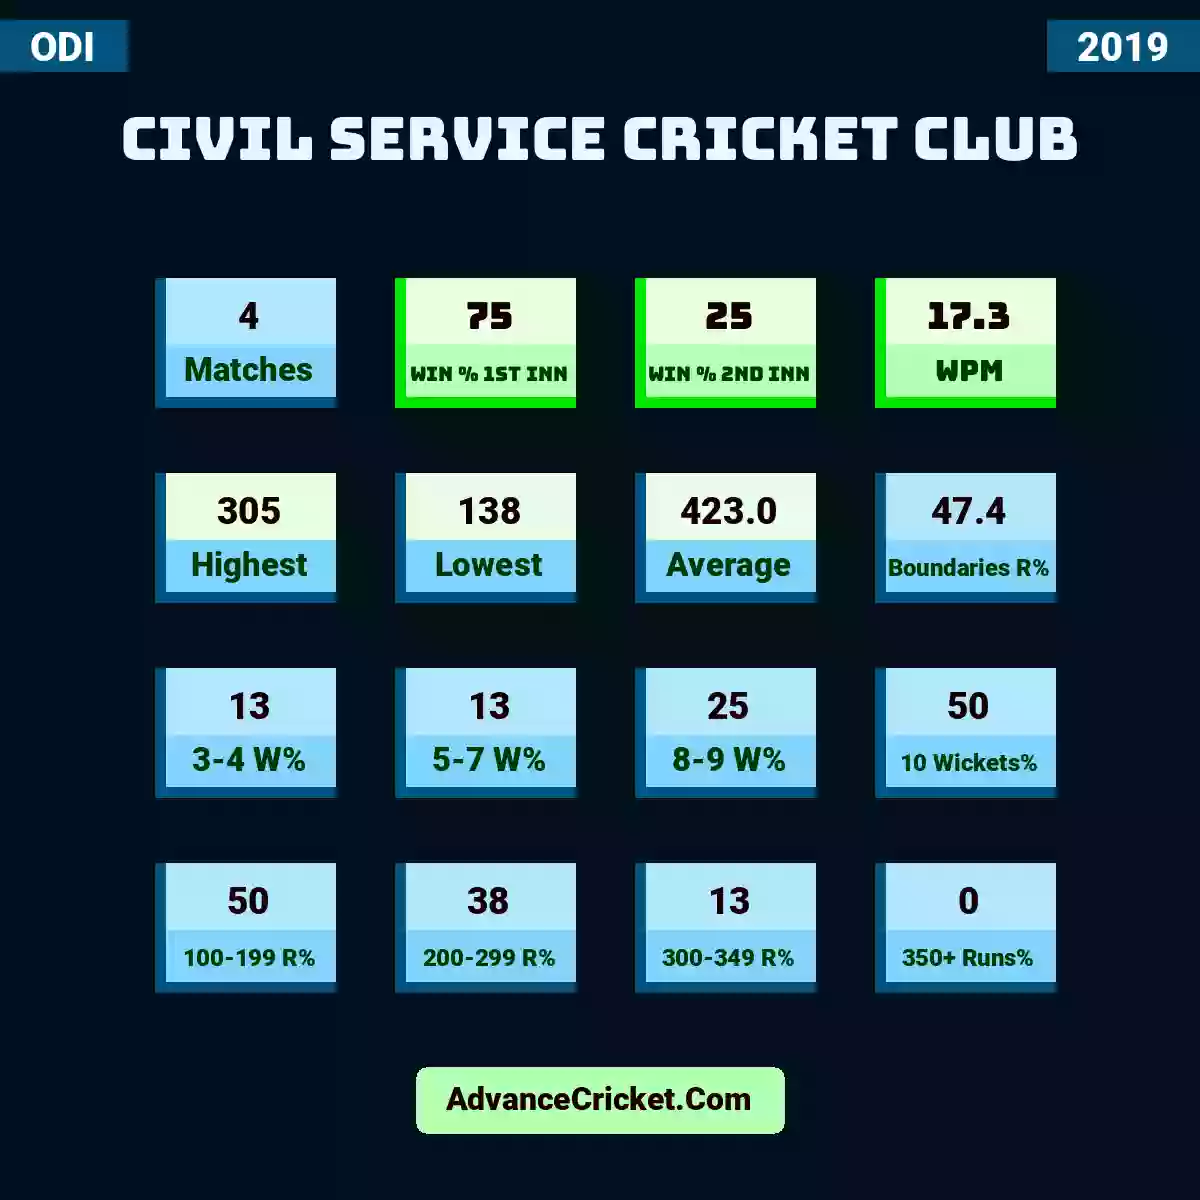 Image showing Civil Service Cricket Club with Matches: 4, Win % 1st Inn: 75, Win % 2nd Inn: 25, WPM: 17.3, Highest: 305, Lowest: 138, Average: 423.0, Boundaries R%: 47.4, 3-4 W%: 13, 5-7 W%: 13, 8-9 W%: 25, 10 Wickets%: 50, 100-199 R%: 50, 200-299 R%: 38, 300-349 R%: 13, 350+ Runs%: 0.